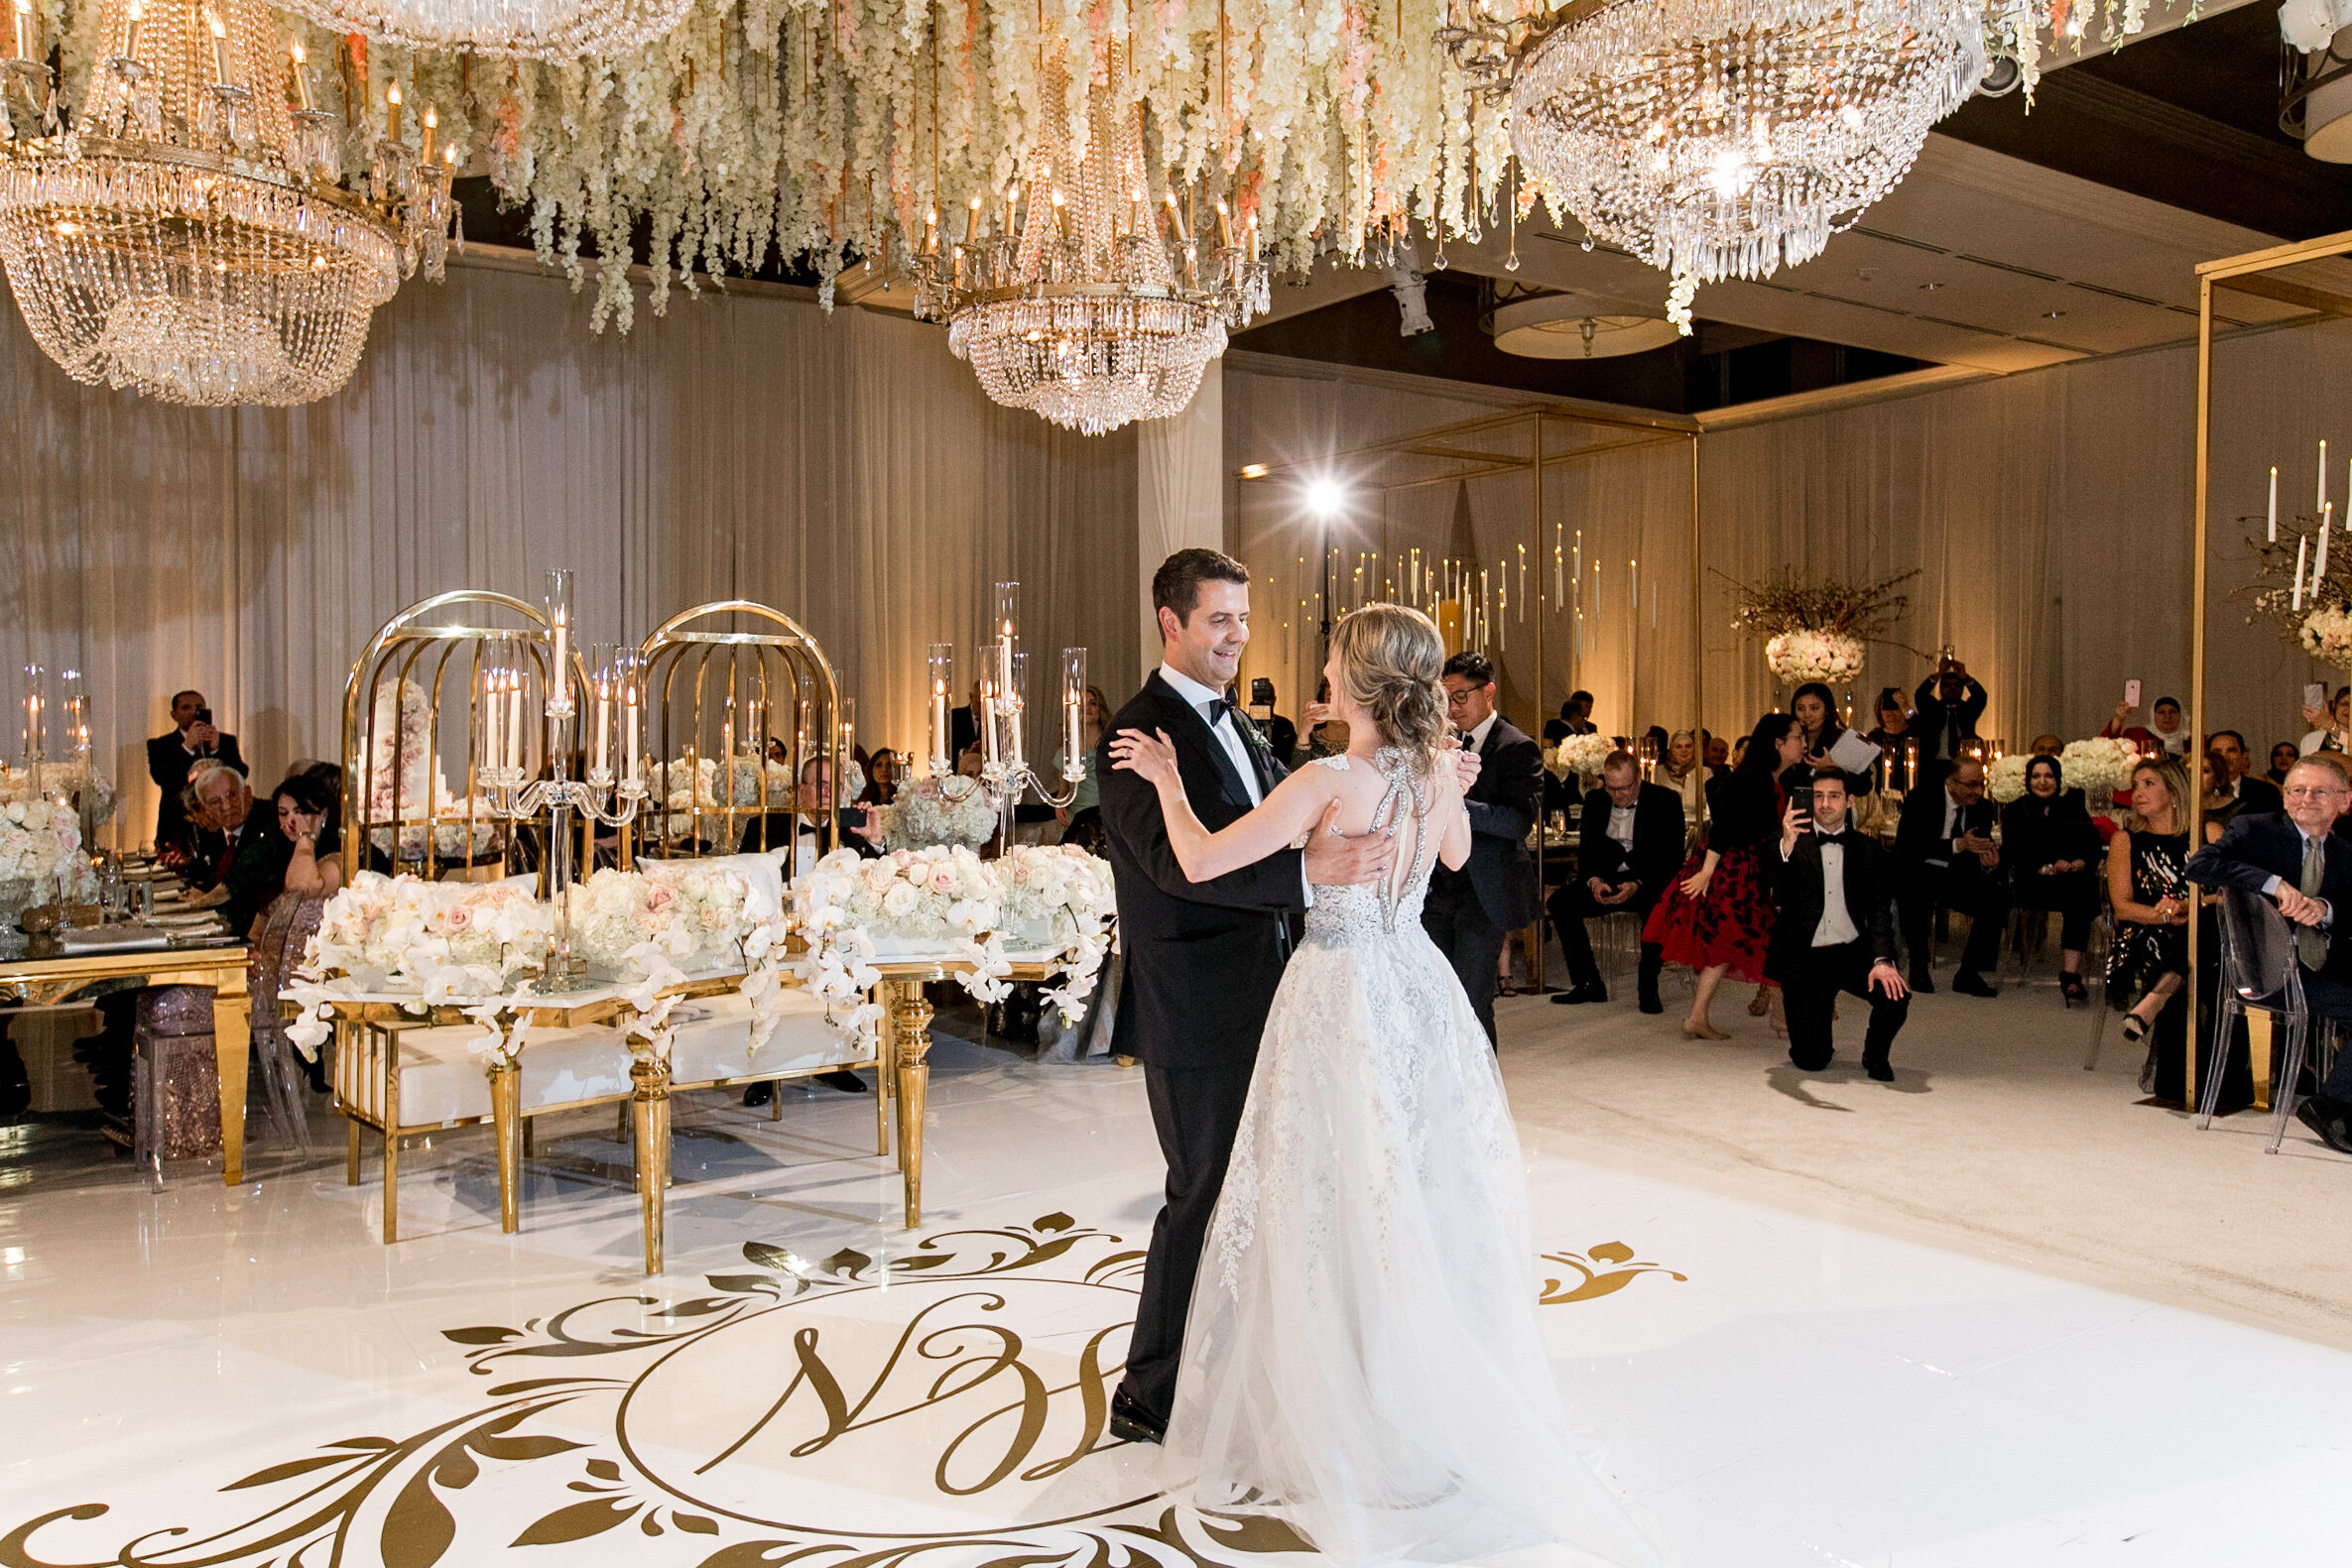 Orange County Area Weddings, The Ritz-Carlton, Laguna Niguel